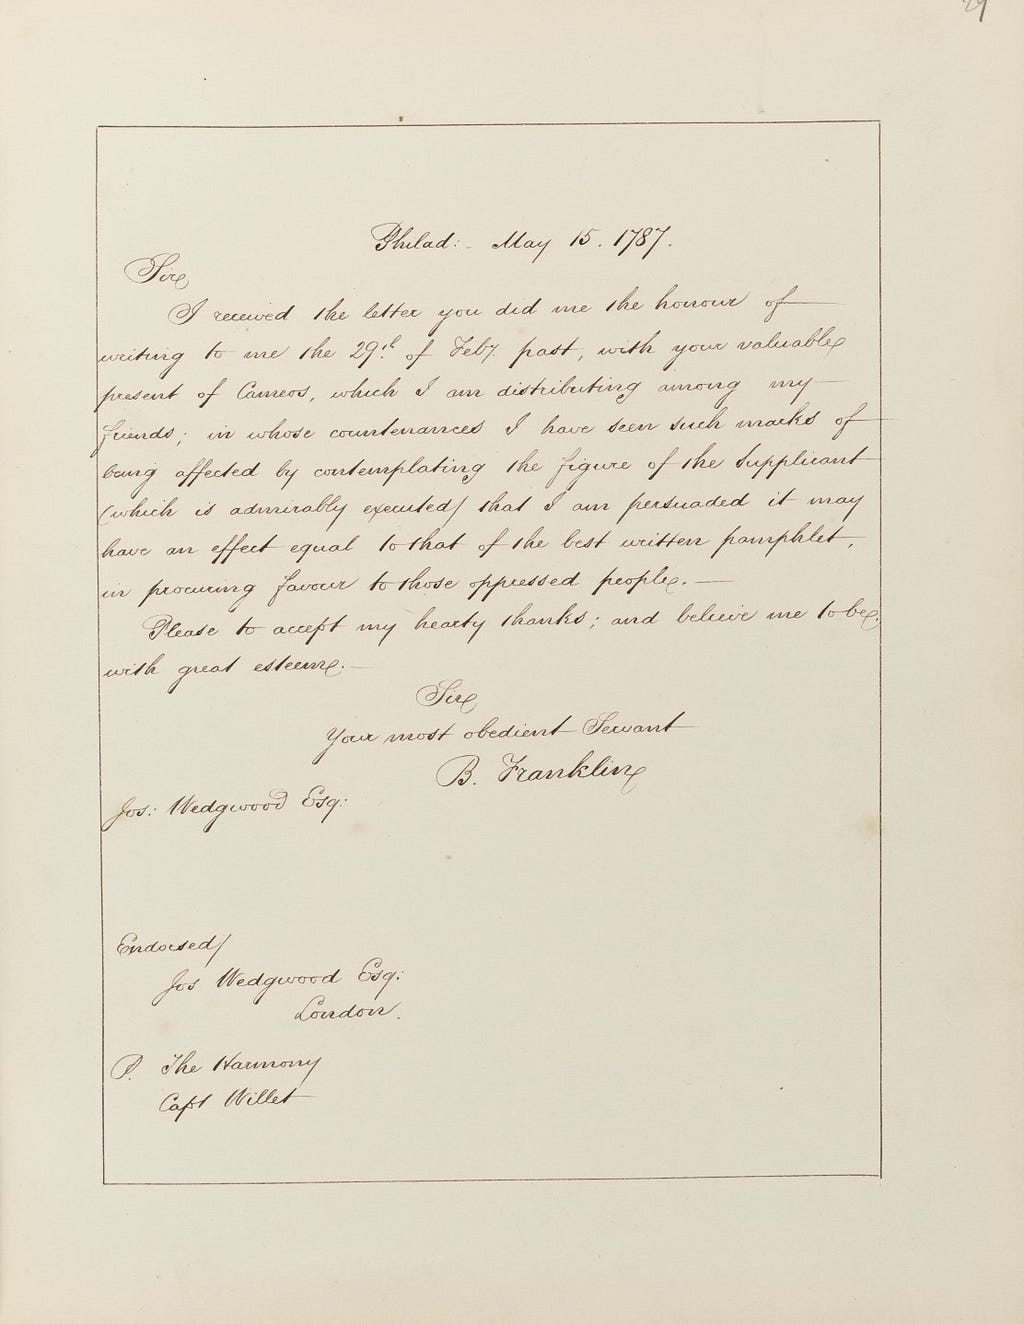 A handwritten letter signed by Benjamin Franklin